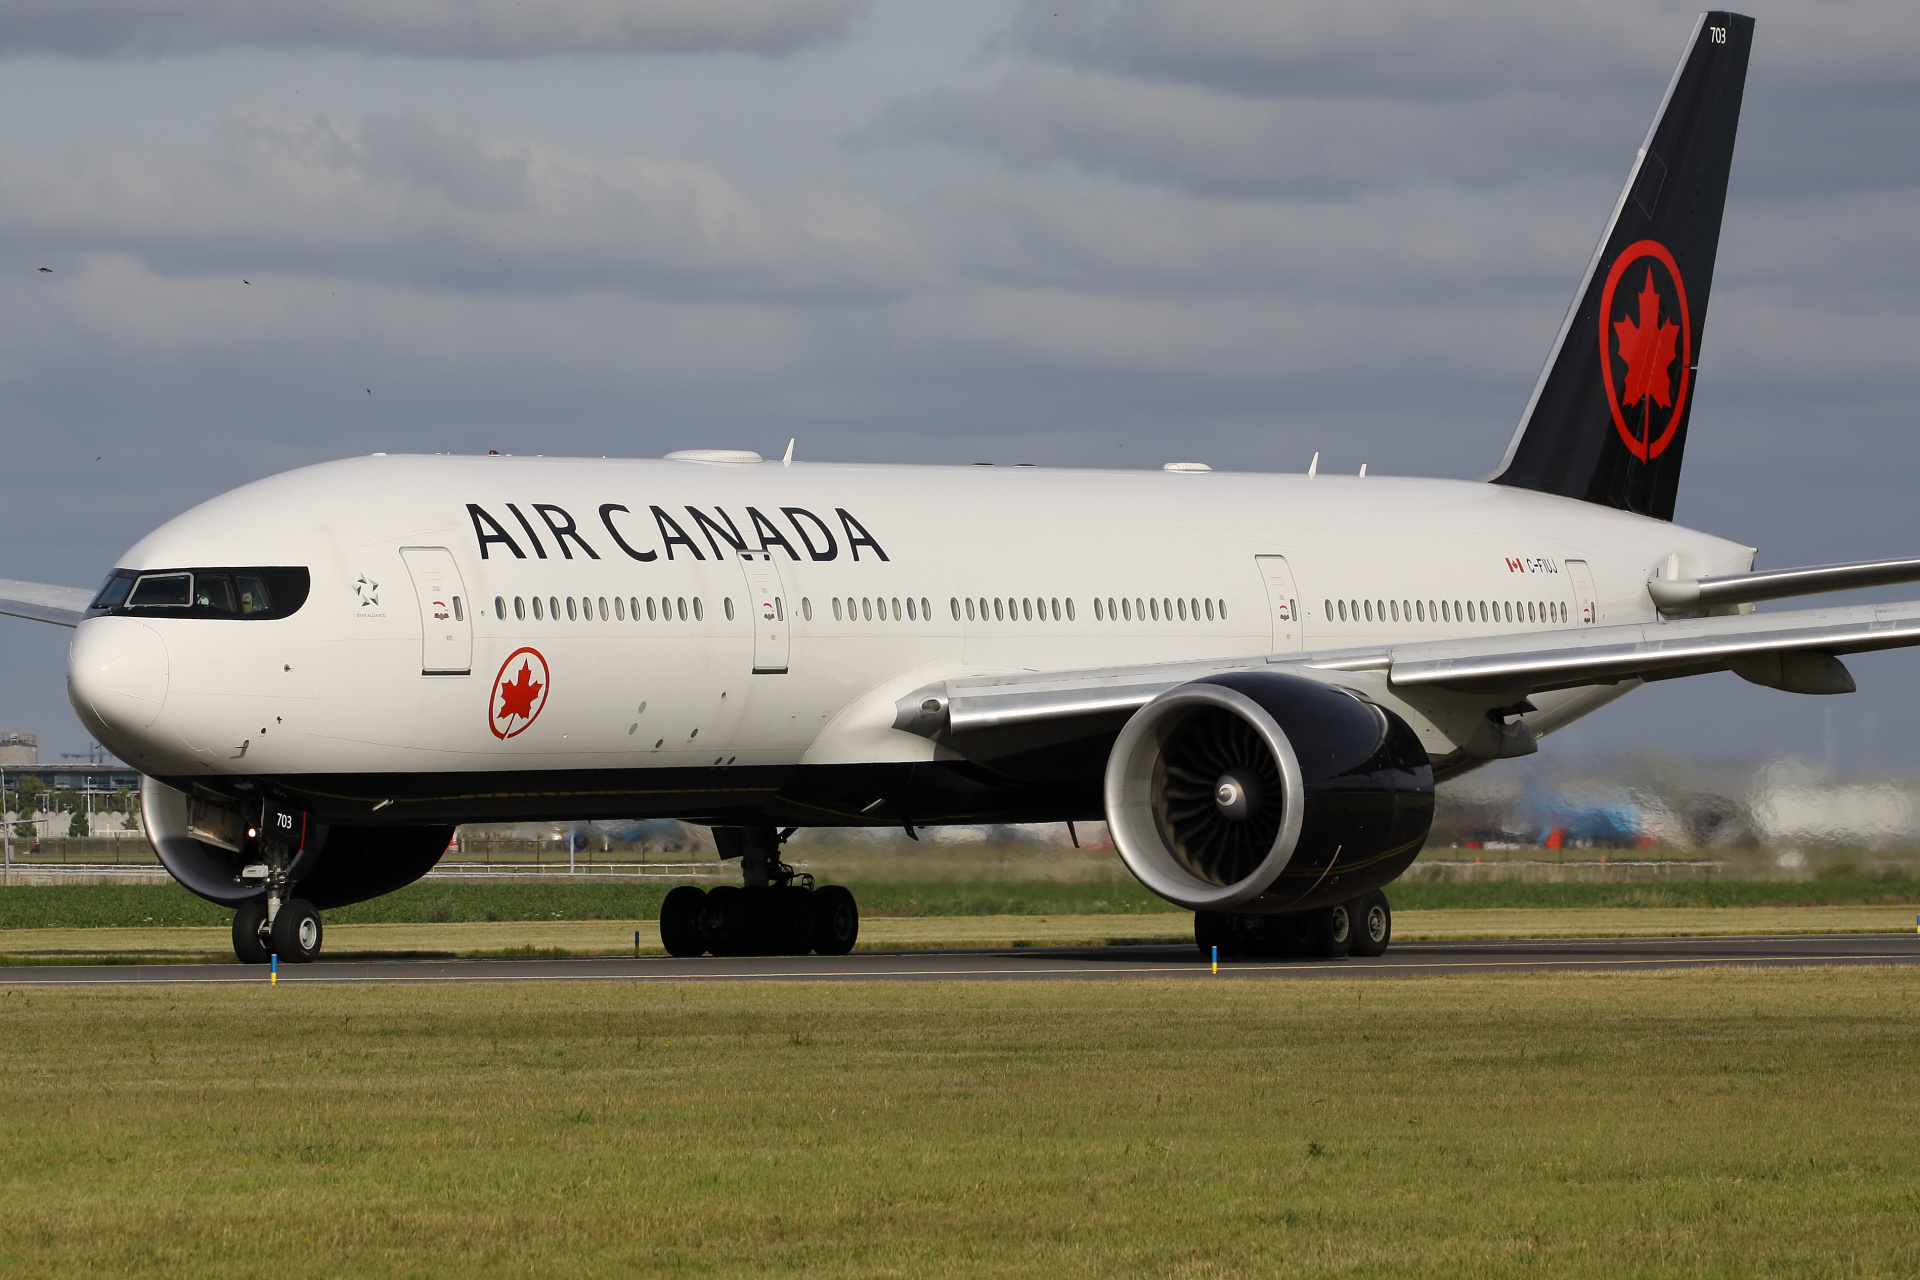 C-FIUJ, Air Canada (Aircraft » Schiphol Spotting » Boeing 777-200LR)